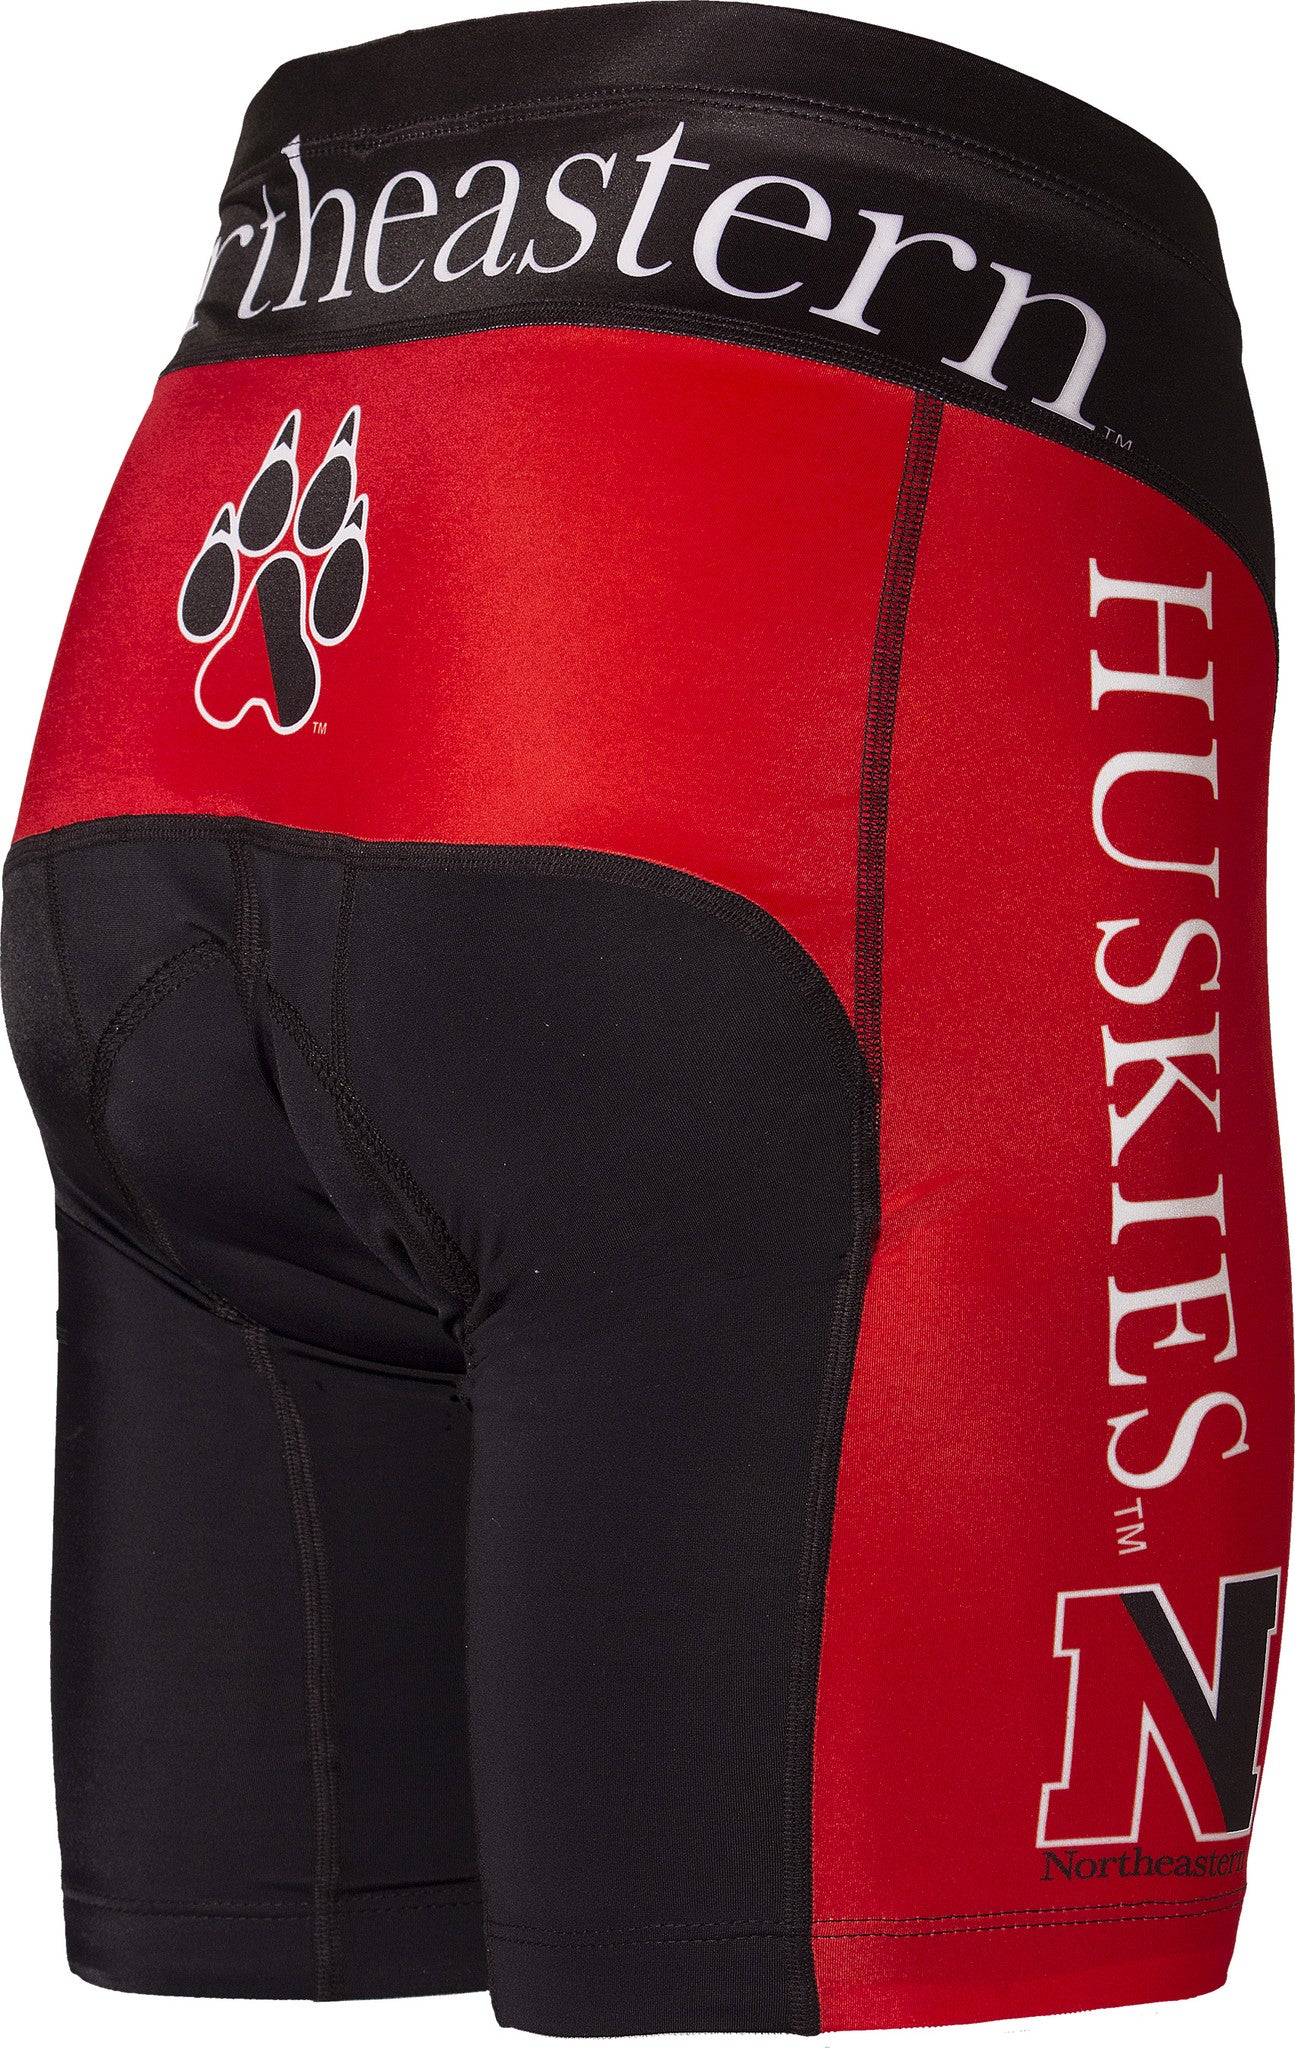 Northeastern Huskies Cycling Shorts (S, M, L, XL, 2XL)